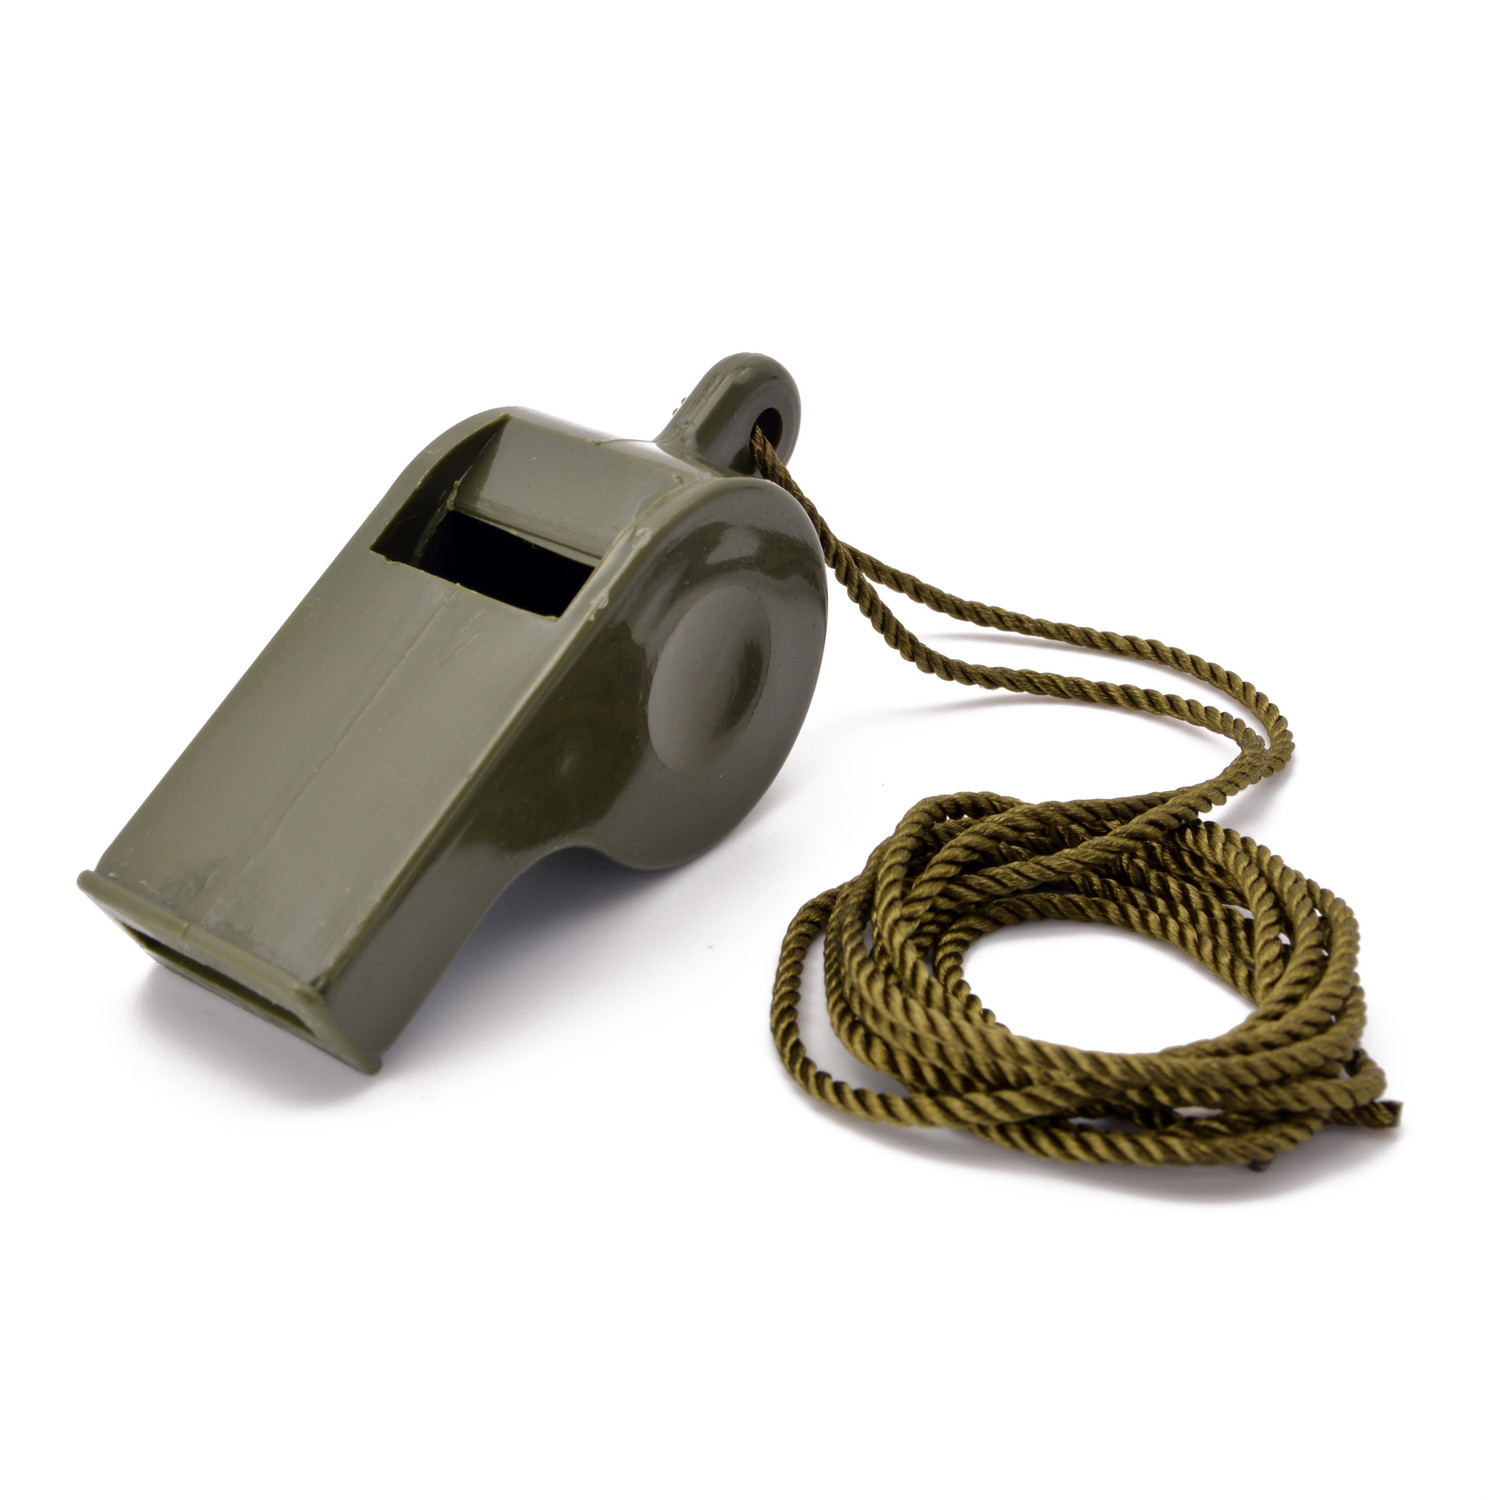 US Signalpfeife in Oliv mit Kordel (US G.I. Whistle)